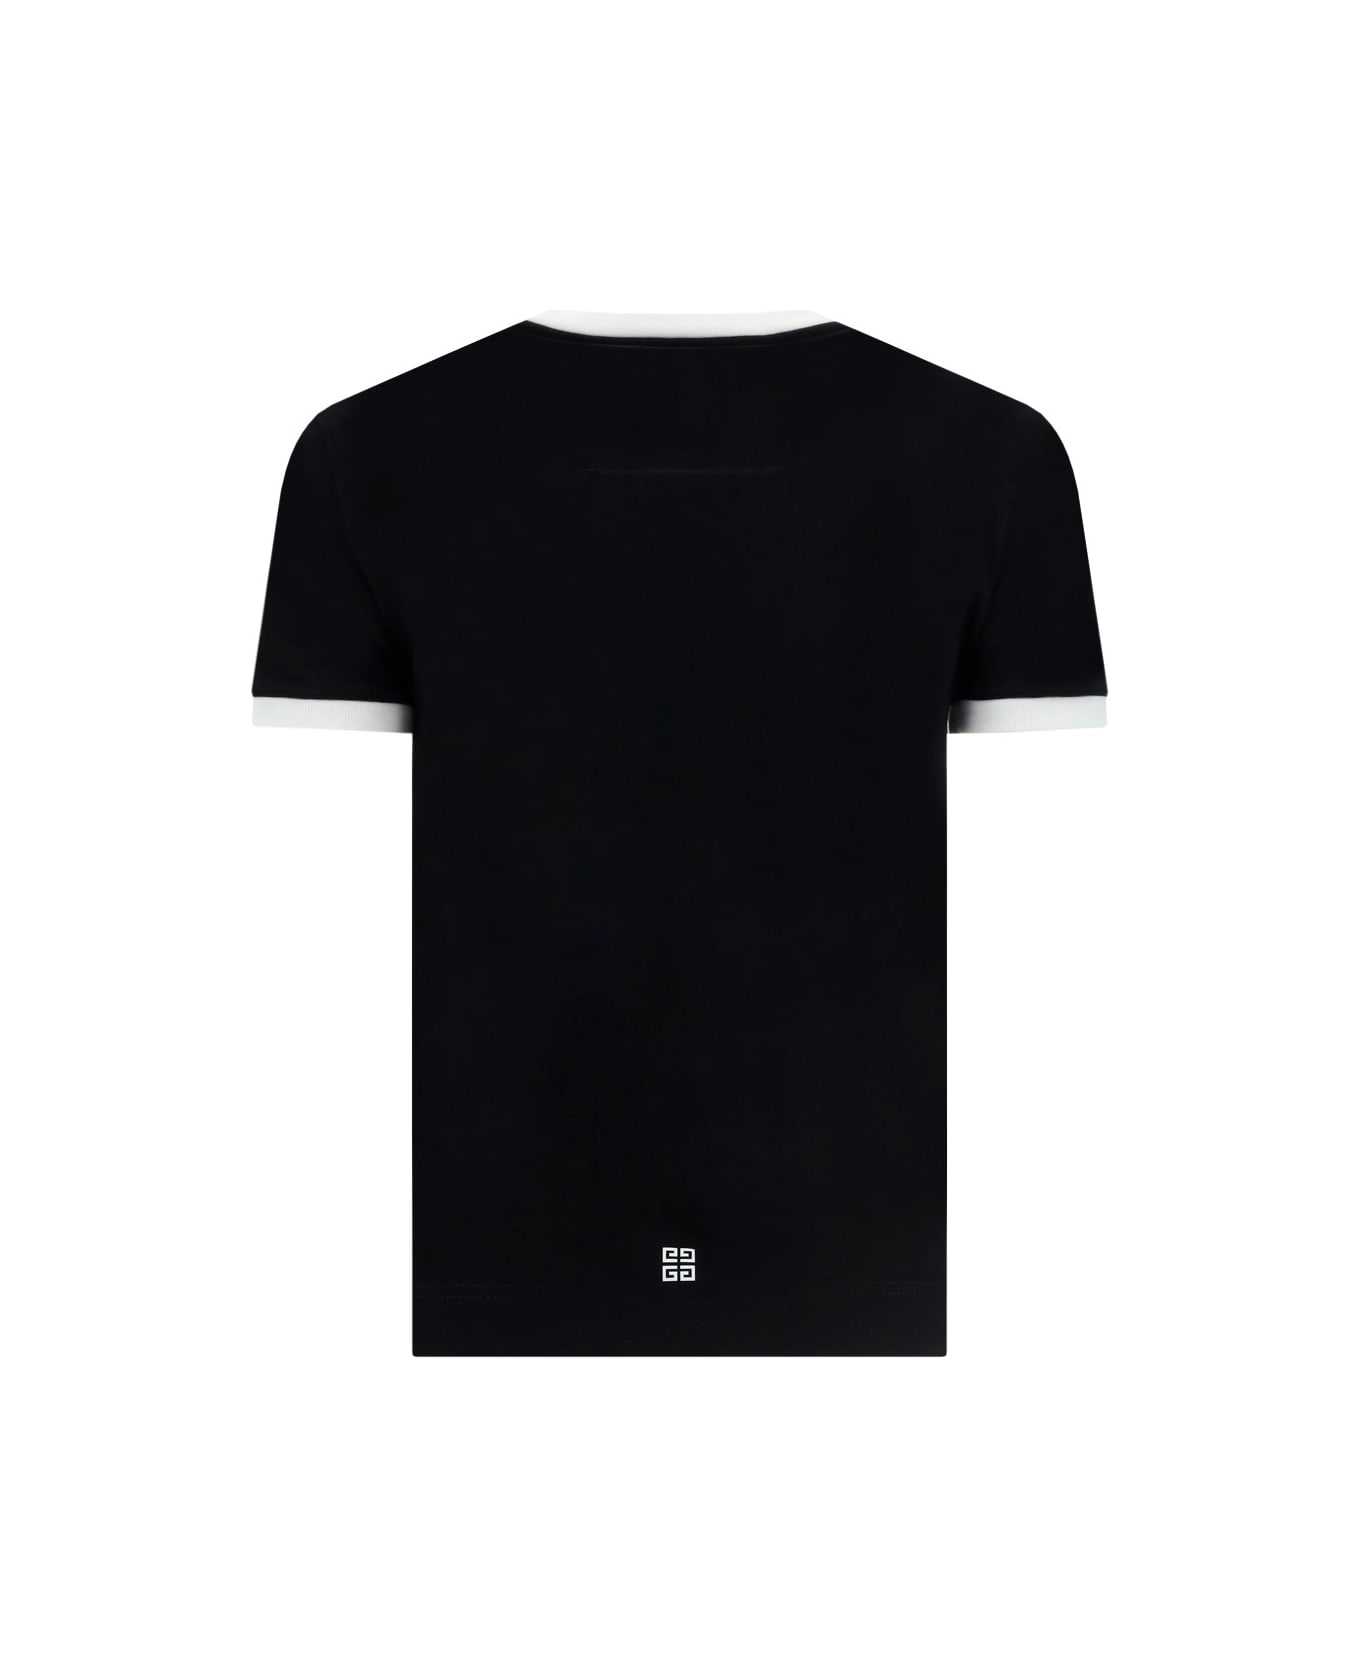 Givenchy Ringer T-shirt - Black Tシャツ